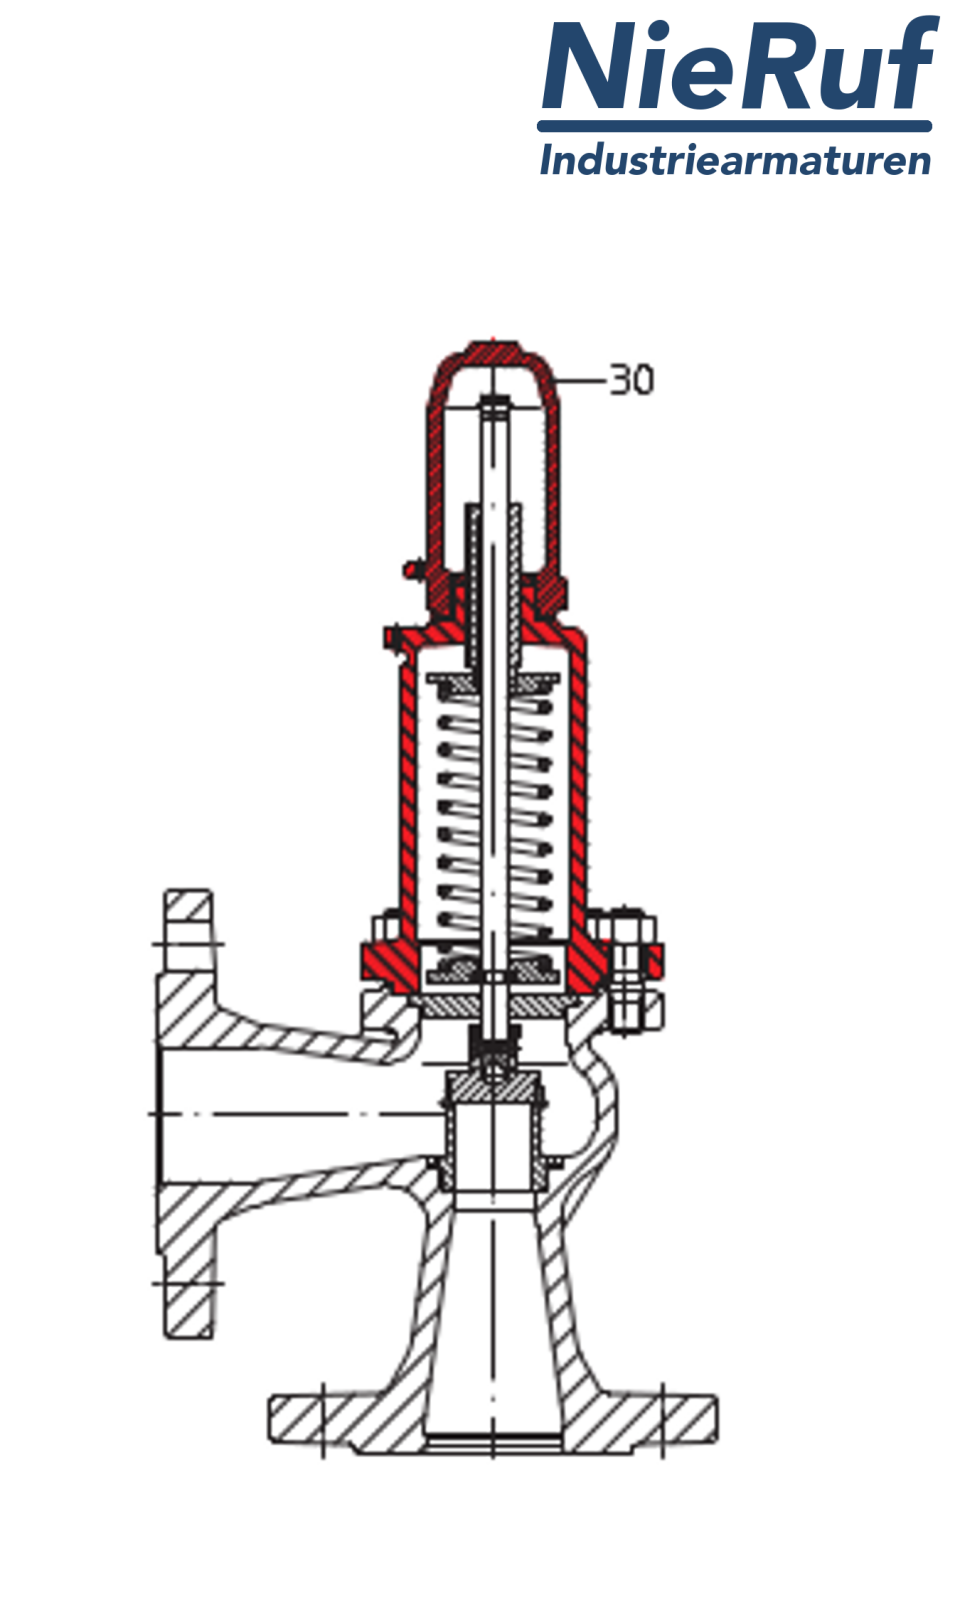 flange-safety valve DN65/DN65 SF0201, cast steel 1.0619+N FPM, without lever